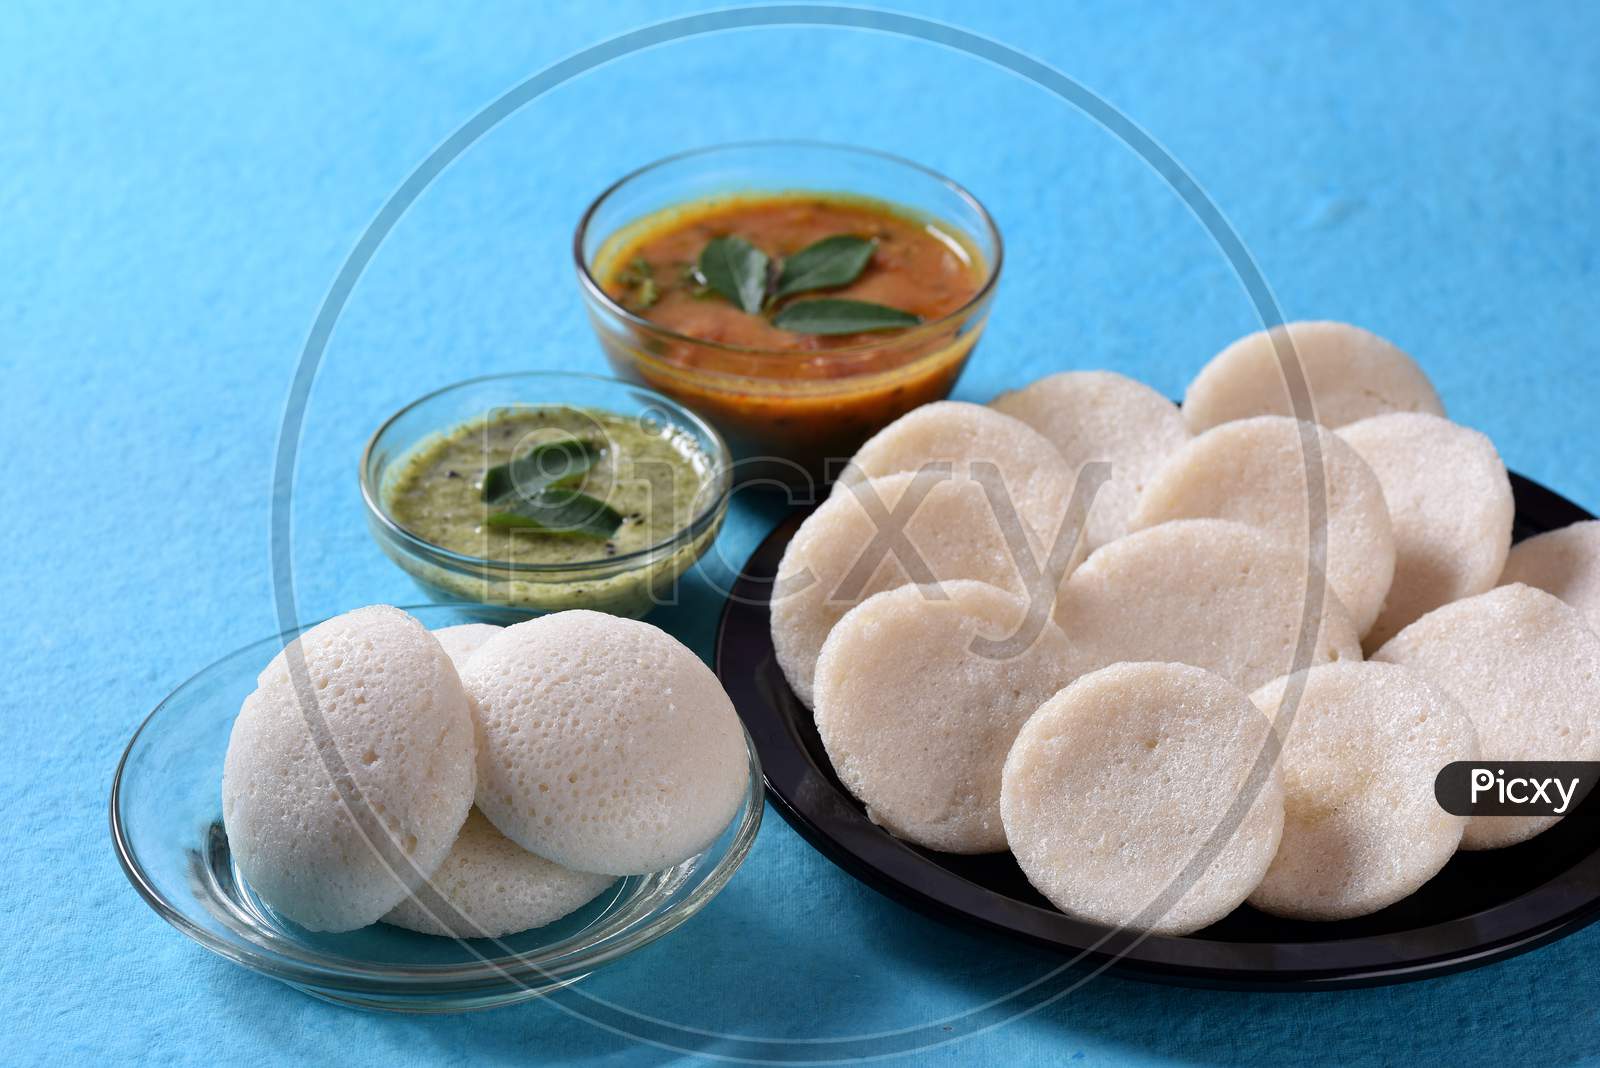 Idli With Sambar And Coconut Chutney On Blue Background, Indian Dish : South Indian Favourite Food Rava Idli Or Semolina Idly Or Rava Idly, Served With Sambar And Green Coconut Chutney.